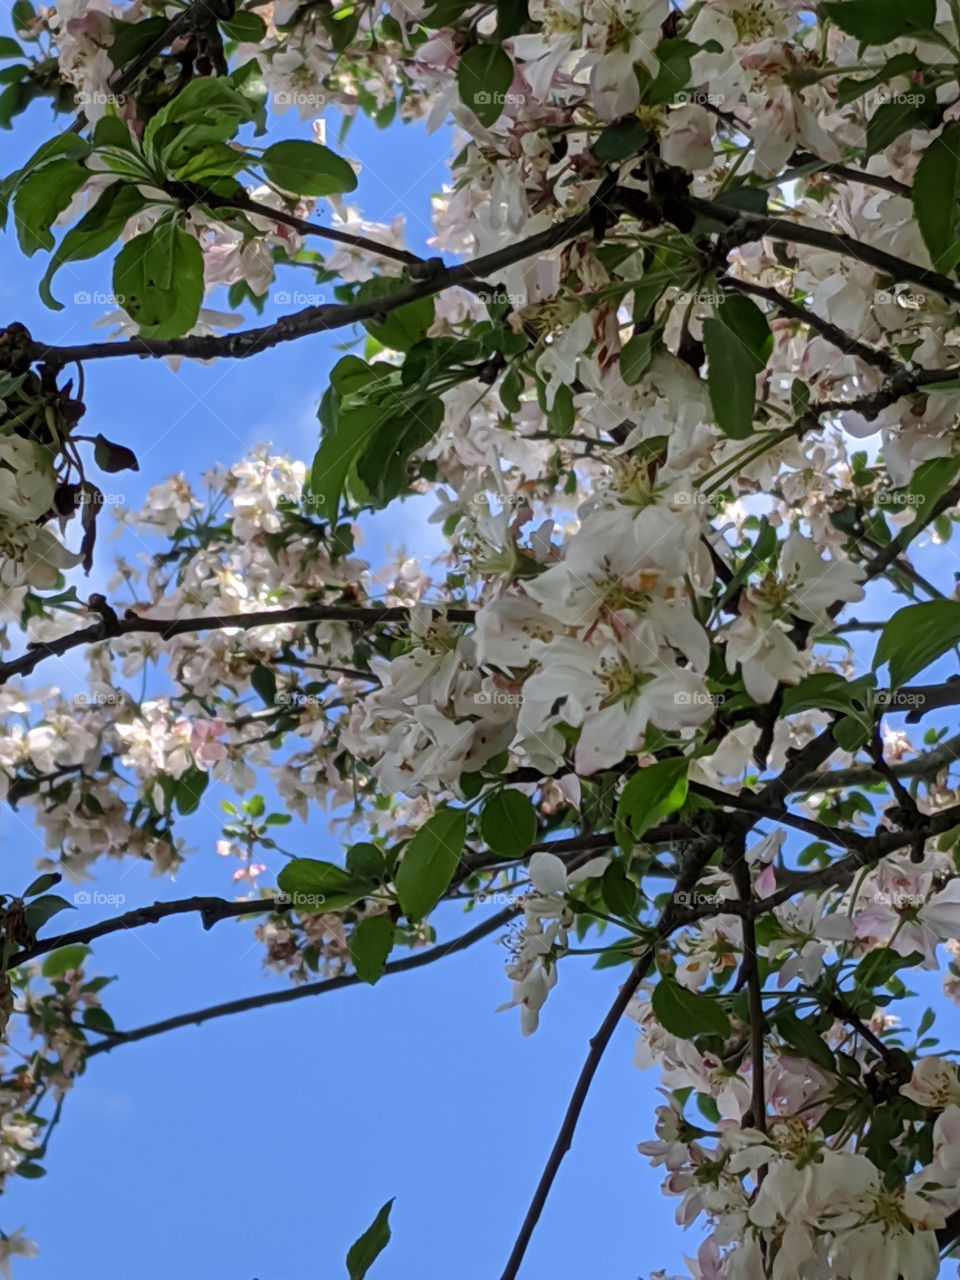 tree in bloom against a blue sky